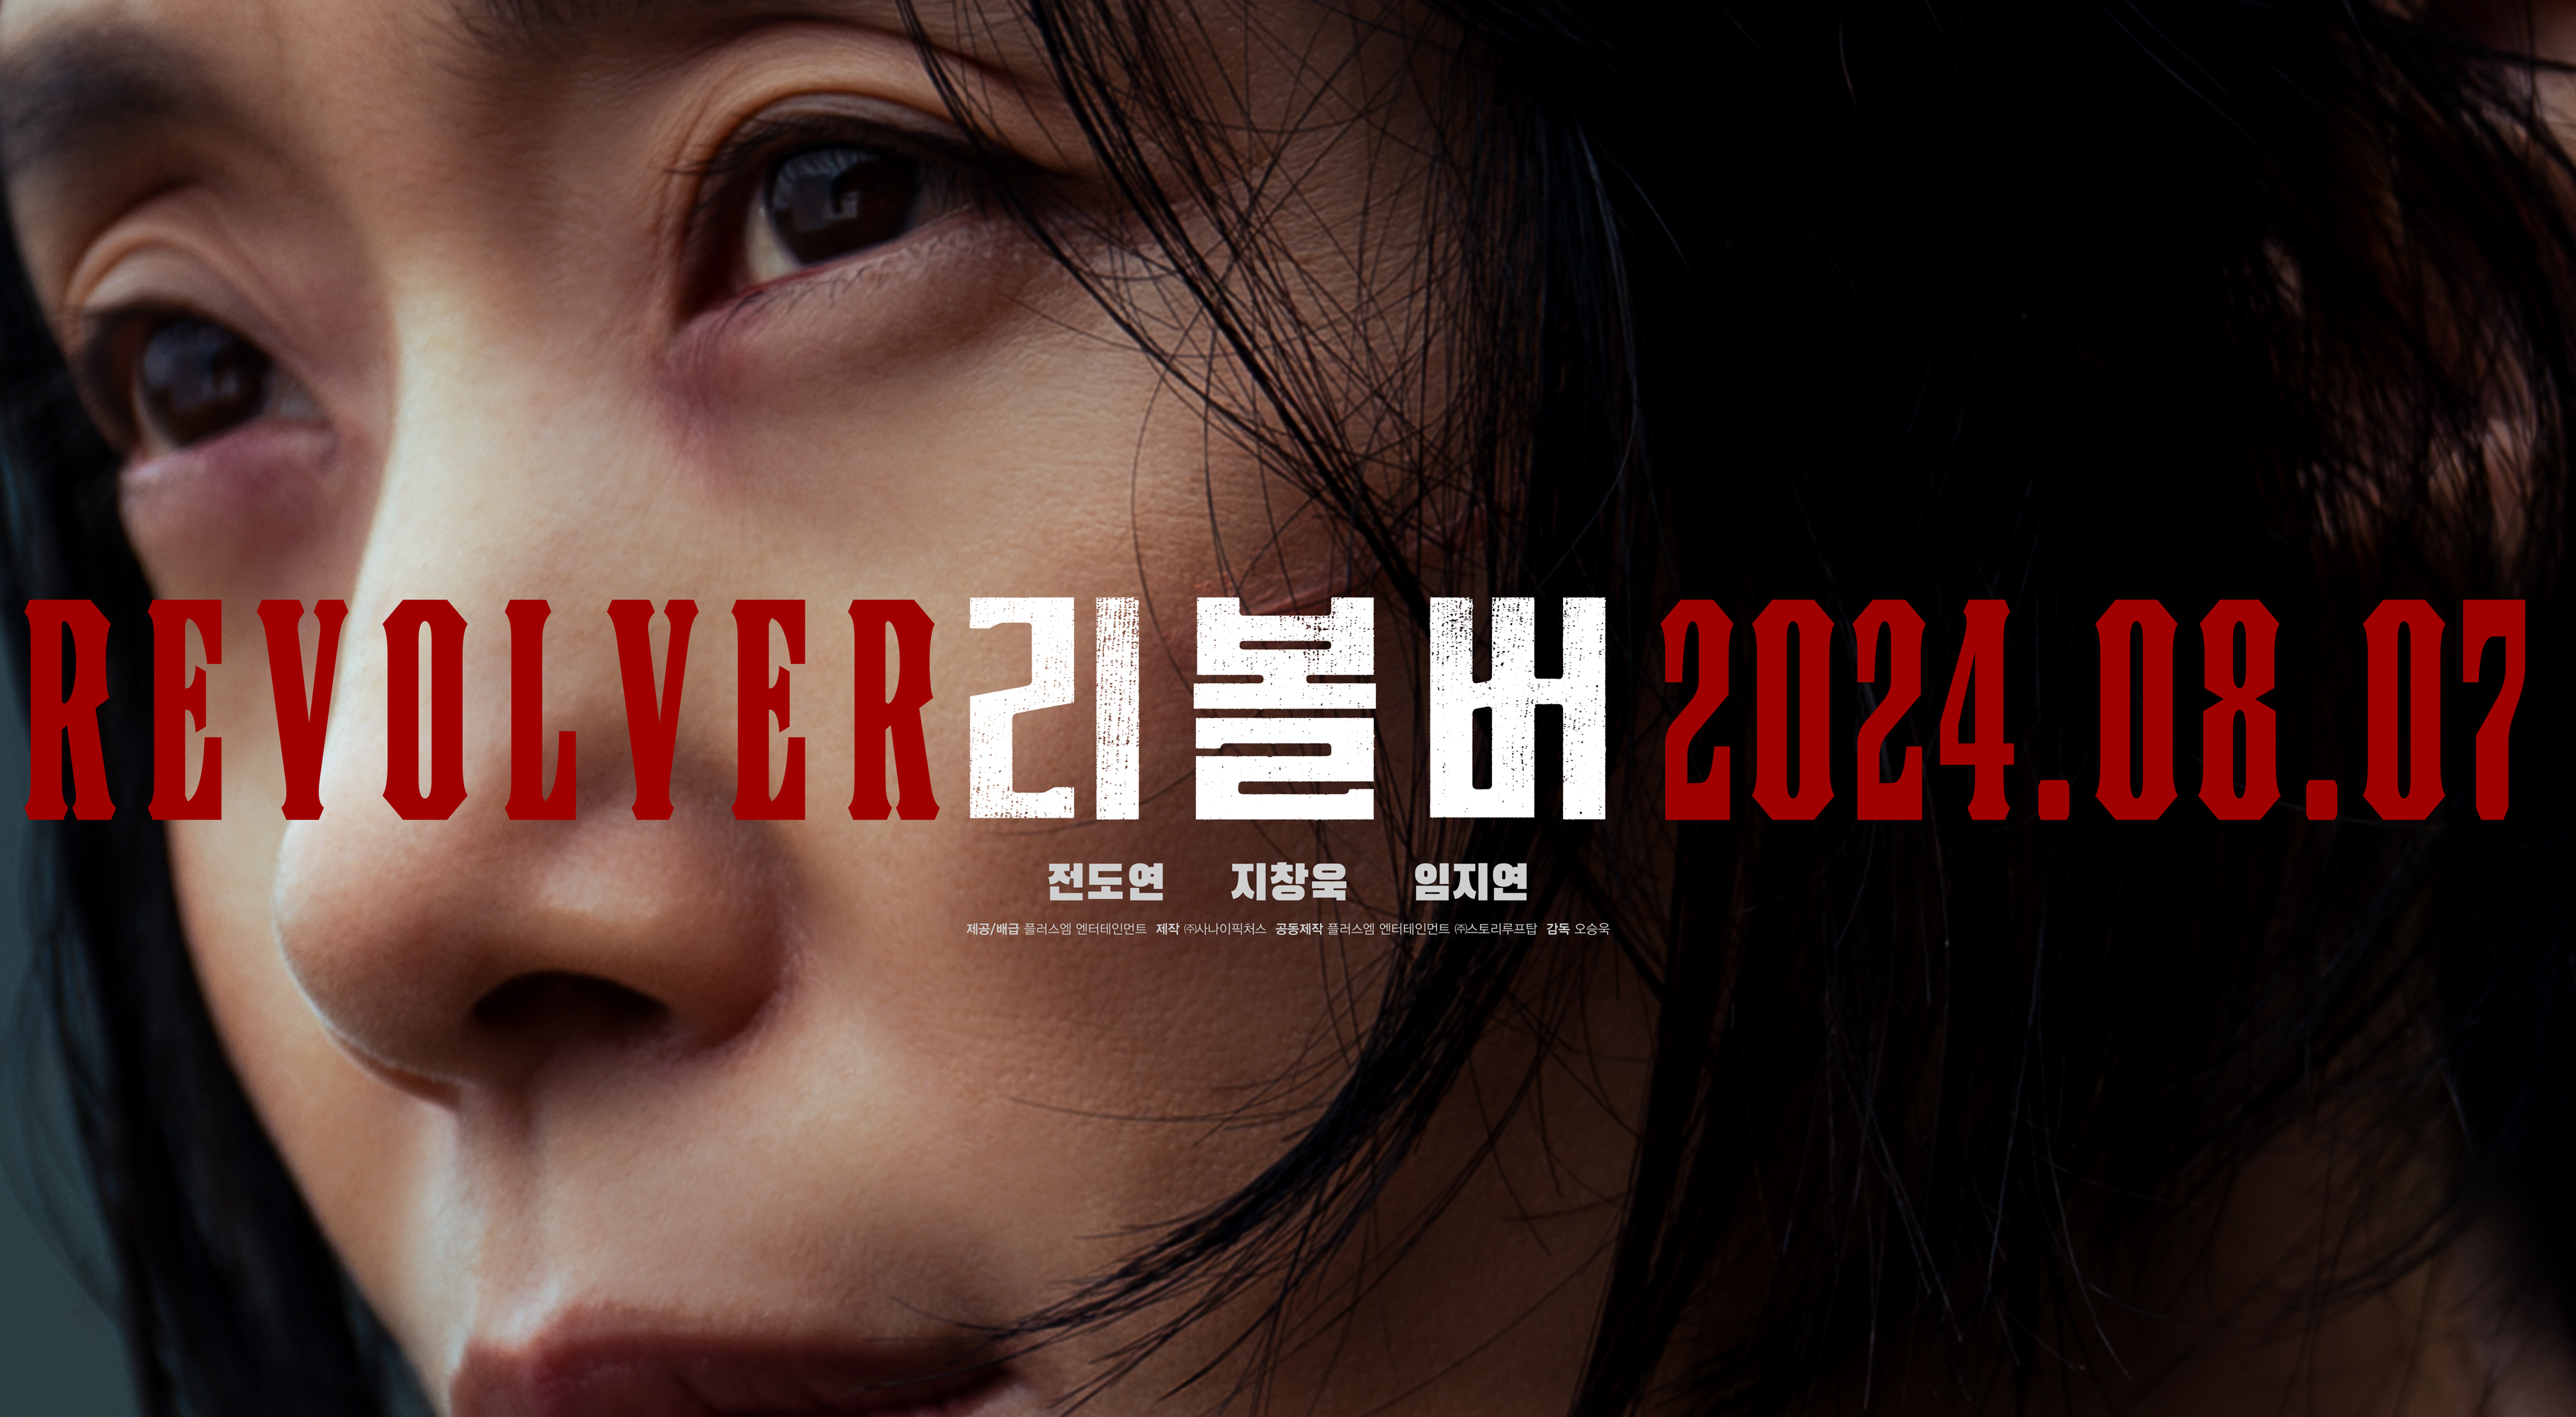 Watch: Jeon Do Yeon Vigorously Pursues Ji Chang Wook Amid Betrayal In Riveting Teaser For New Movie 